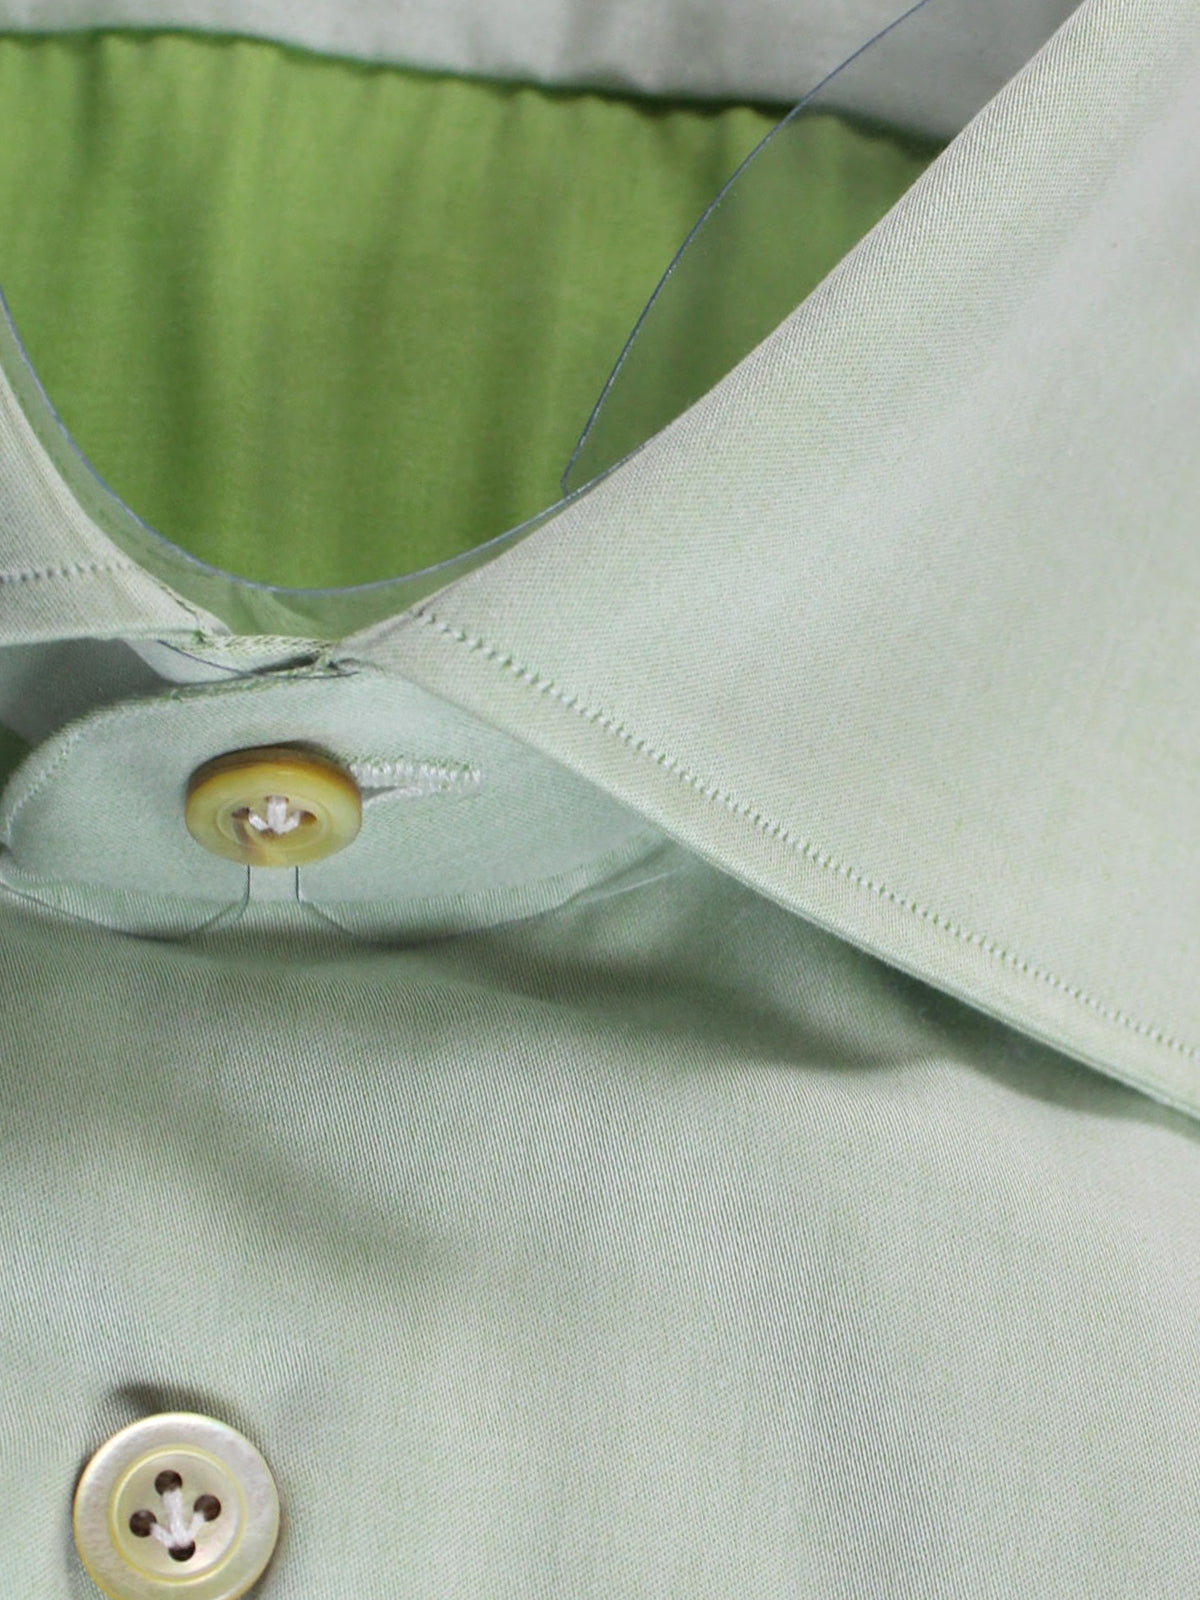 Kiton Dress Shirt Green Solid Spread Collar